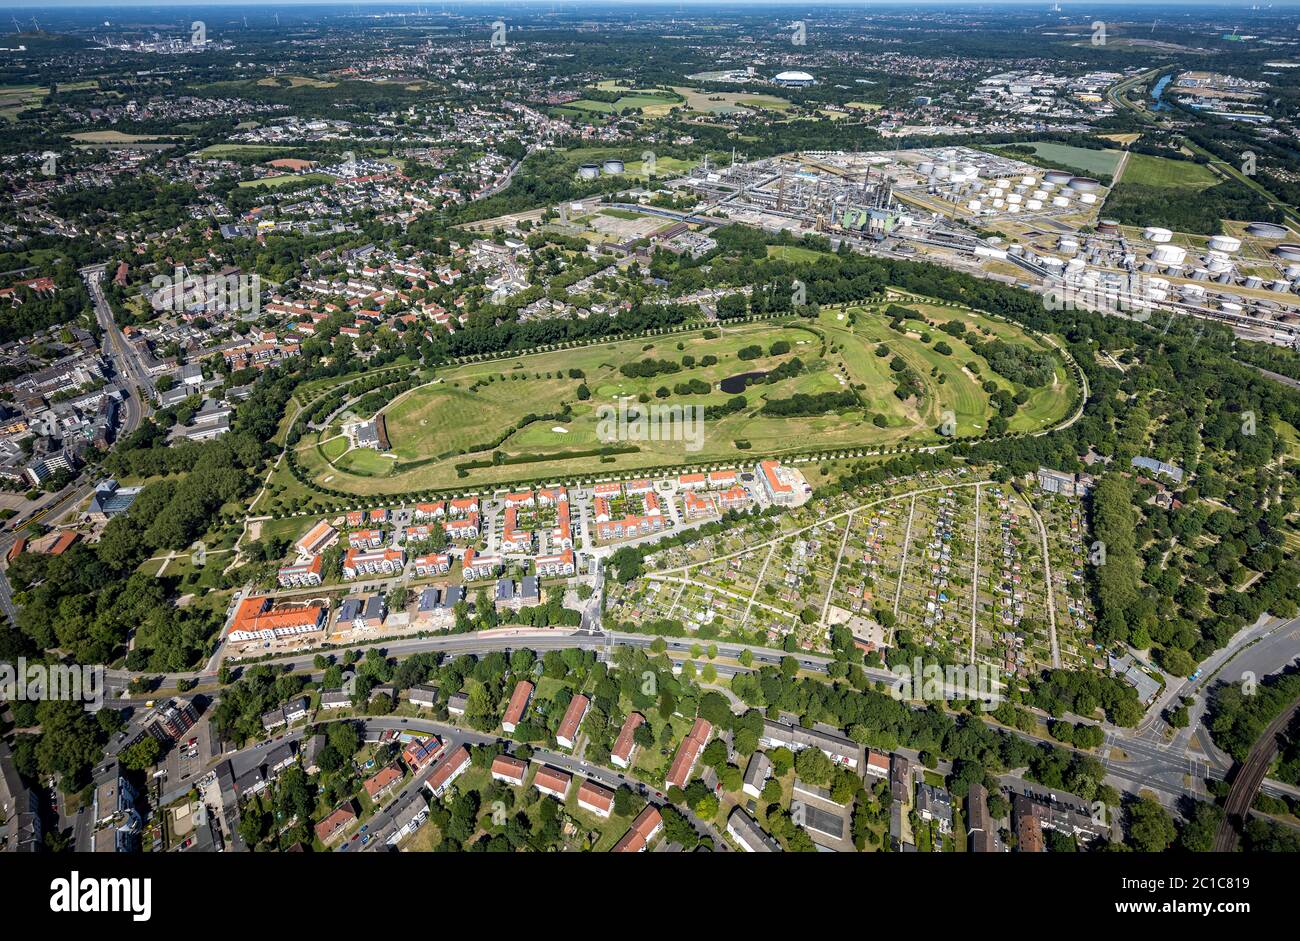 Vista aerea, Golfclub GC Schloß Horst, campo da golf, cimitero Horst-Süd, club di assegnazione Horst Emscher, nuova area di sviluppo, zona residenziale Am Bowenga Foto Stock